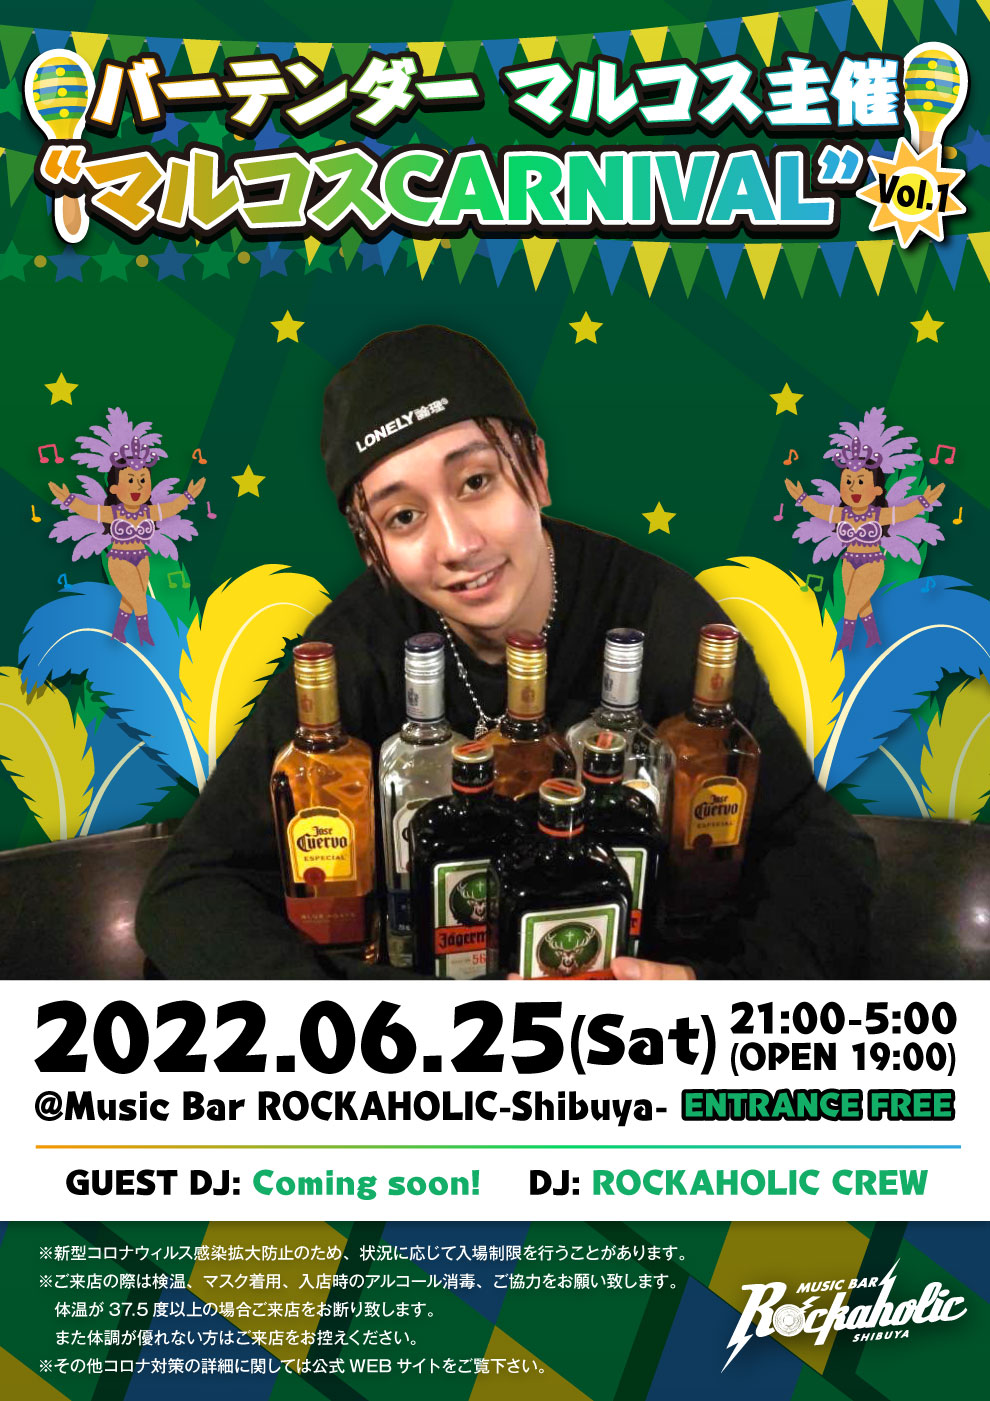 https://bar-rockaholic.jp/shibuya/blog/marcos_carnival_%E6%9C%80%E7%B5%82.jpeg